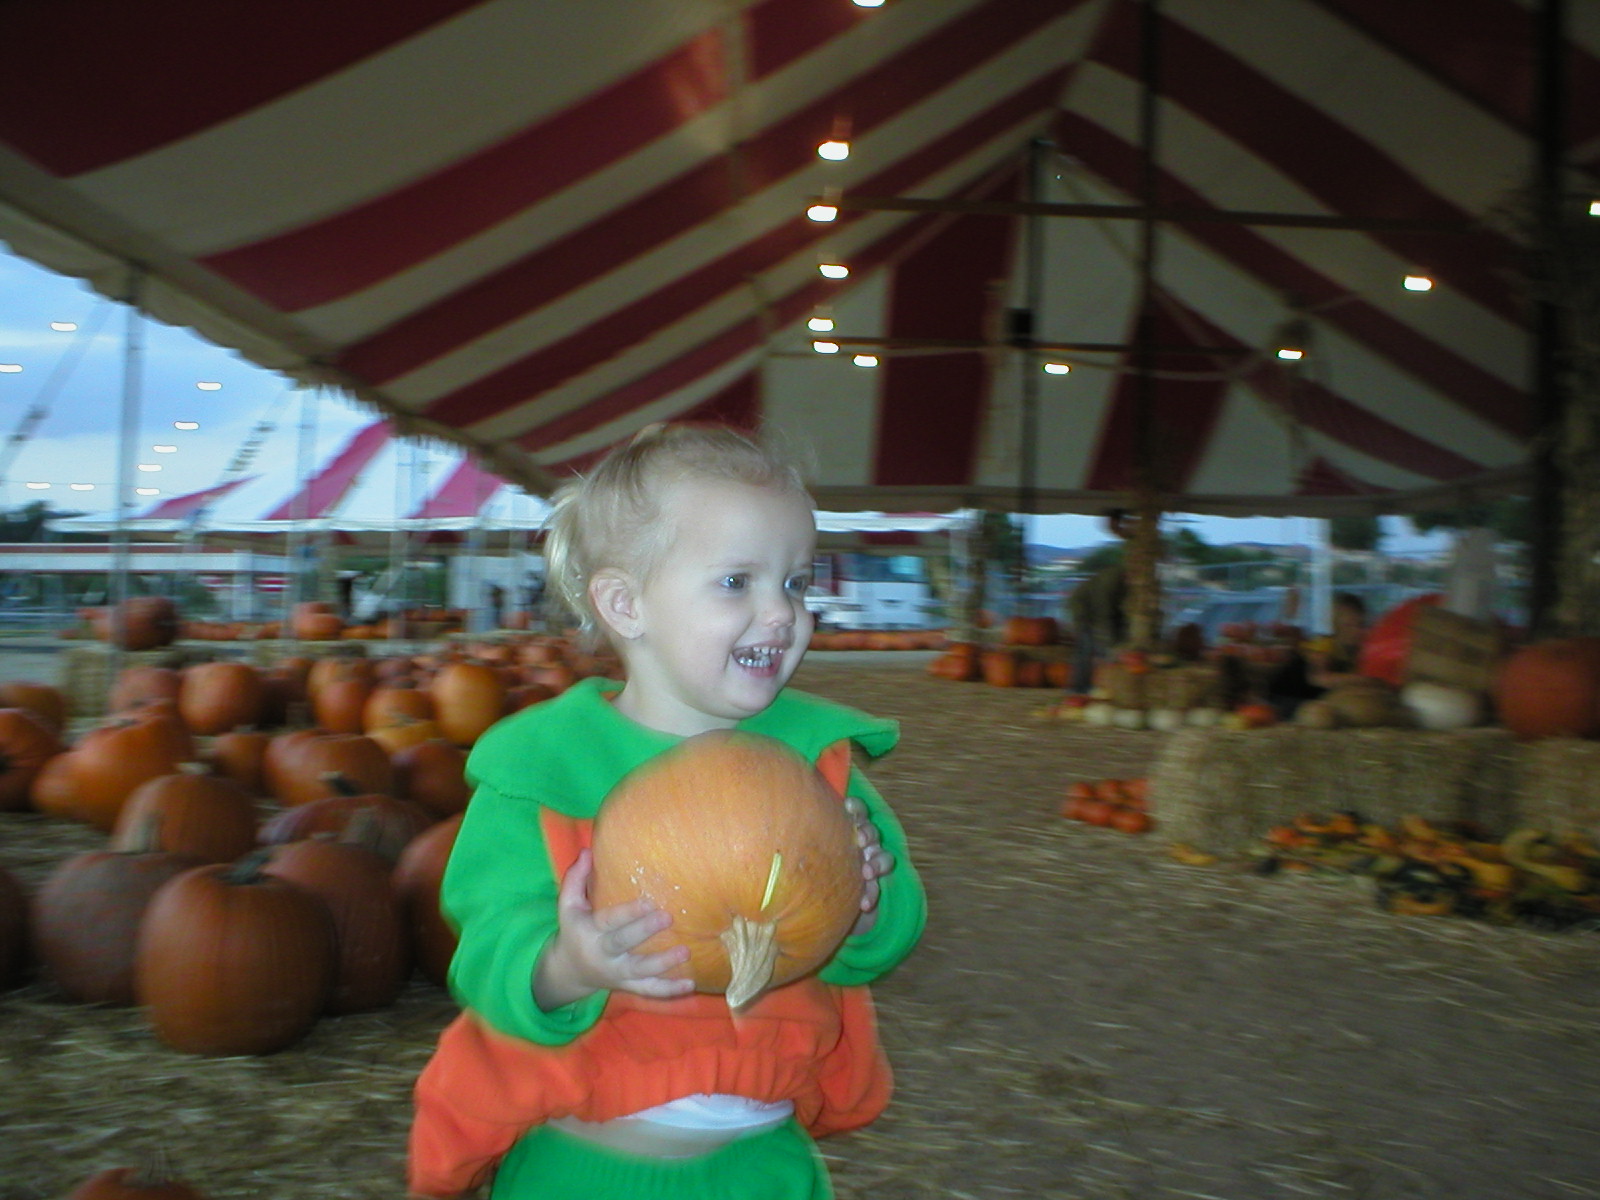 At the "Pumpkin Park" picking the perfect pumpkin